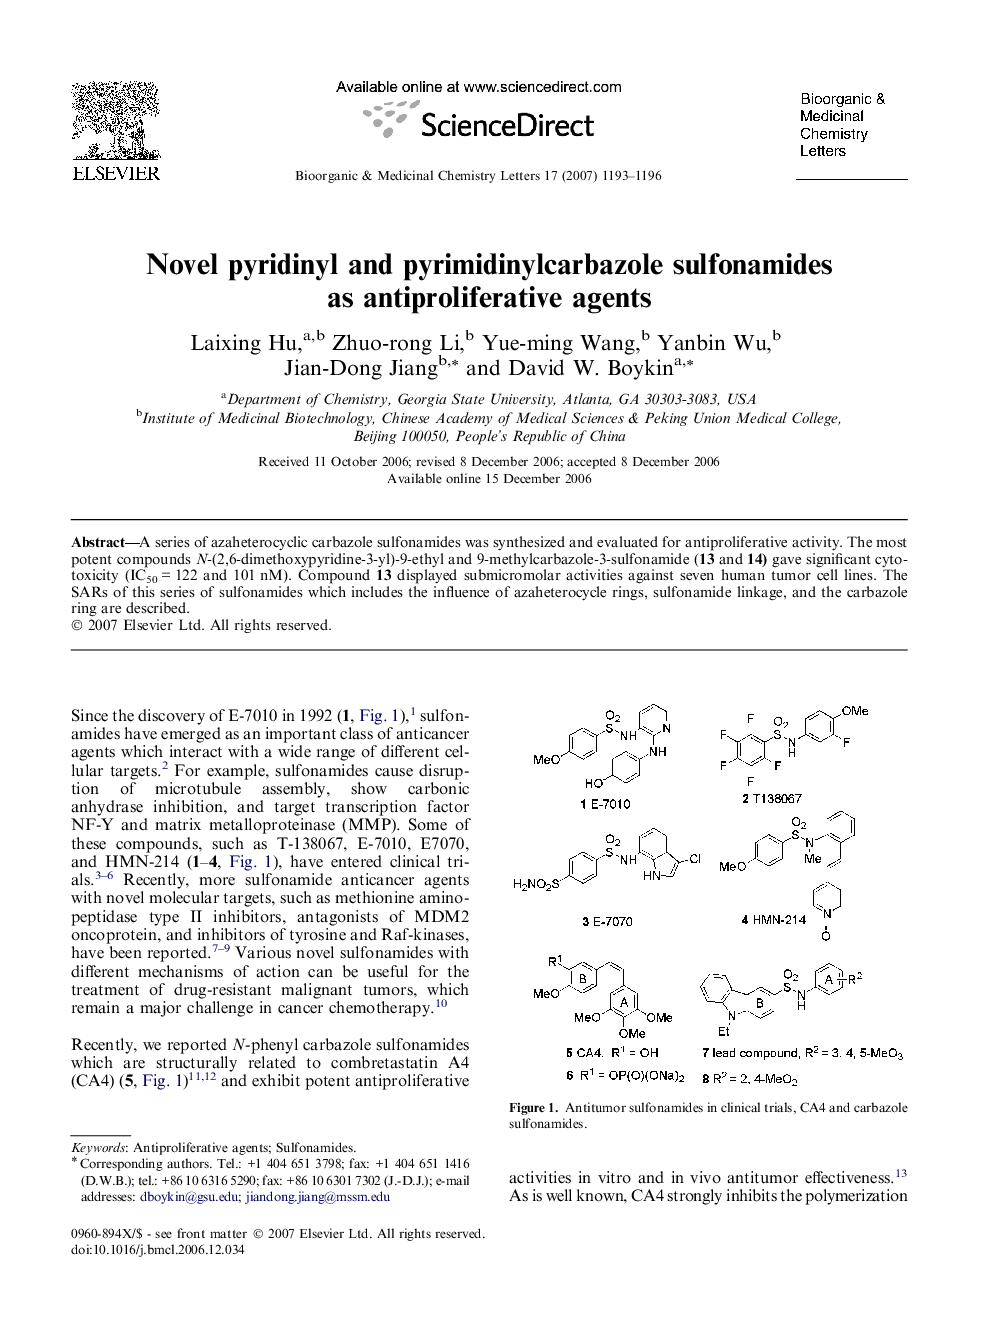 Novel pyridinyl and pyrimidinylcarbazole sulfonamides as antiproliferative agents